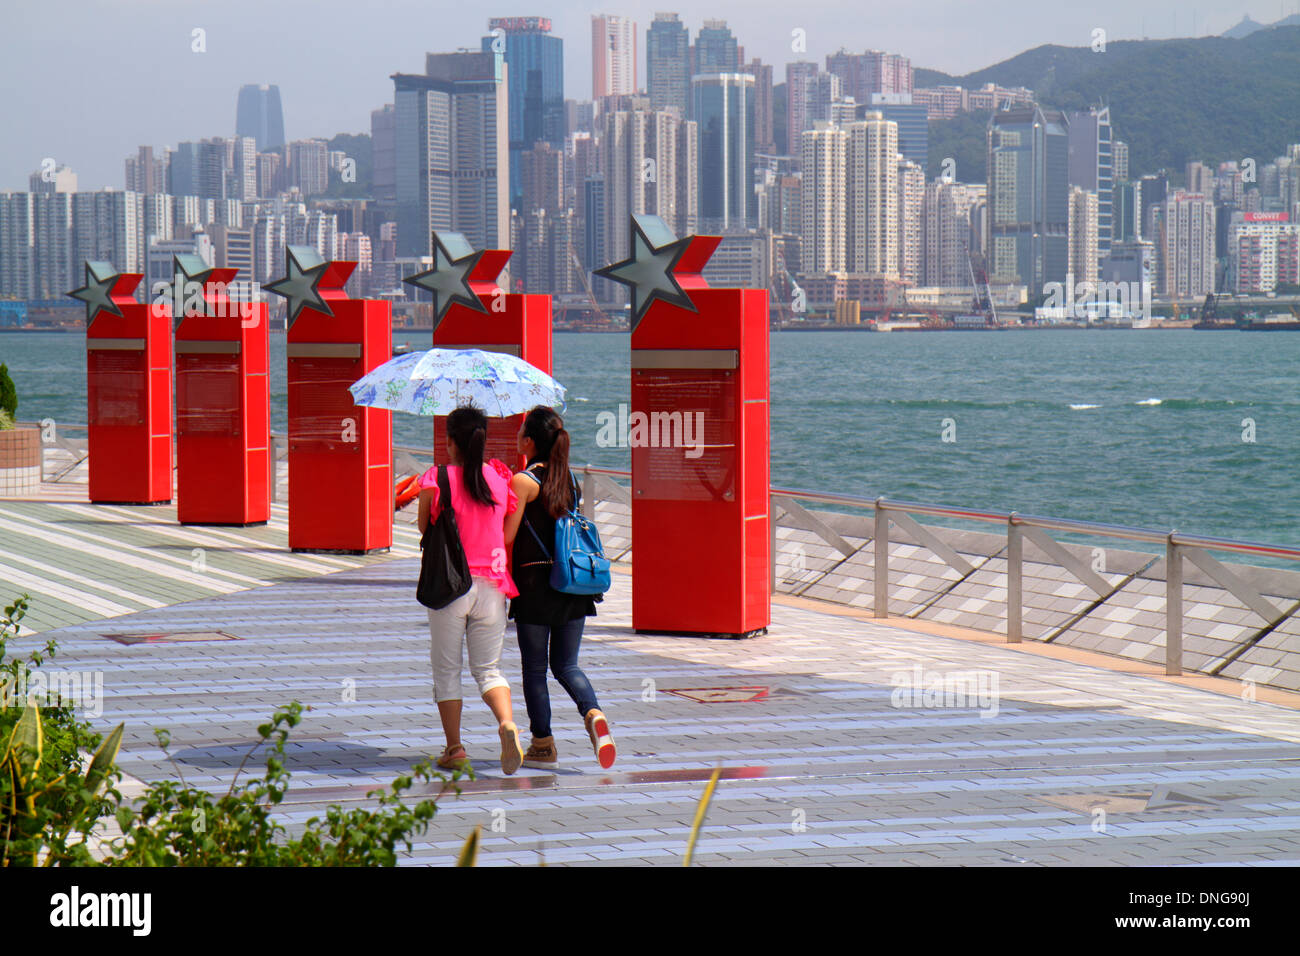 Hong Kong China,HK,Asia,Chinese,Oriental,Kowloon,Tsim Sha Tsui,Avenue of the Stars,Victoria Harbour,harbor,waterfront promenade,Asian adult,adults,wom Stock Photo